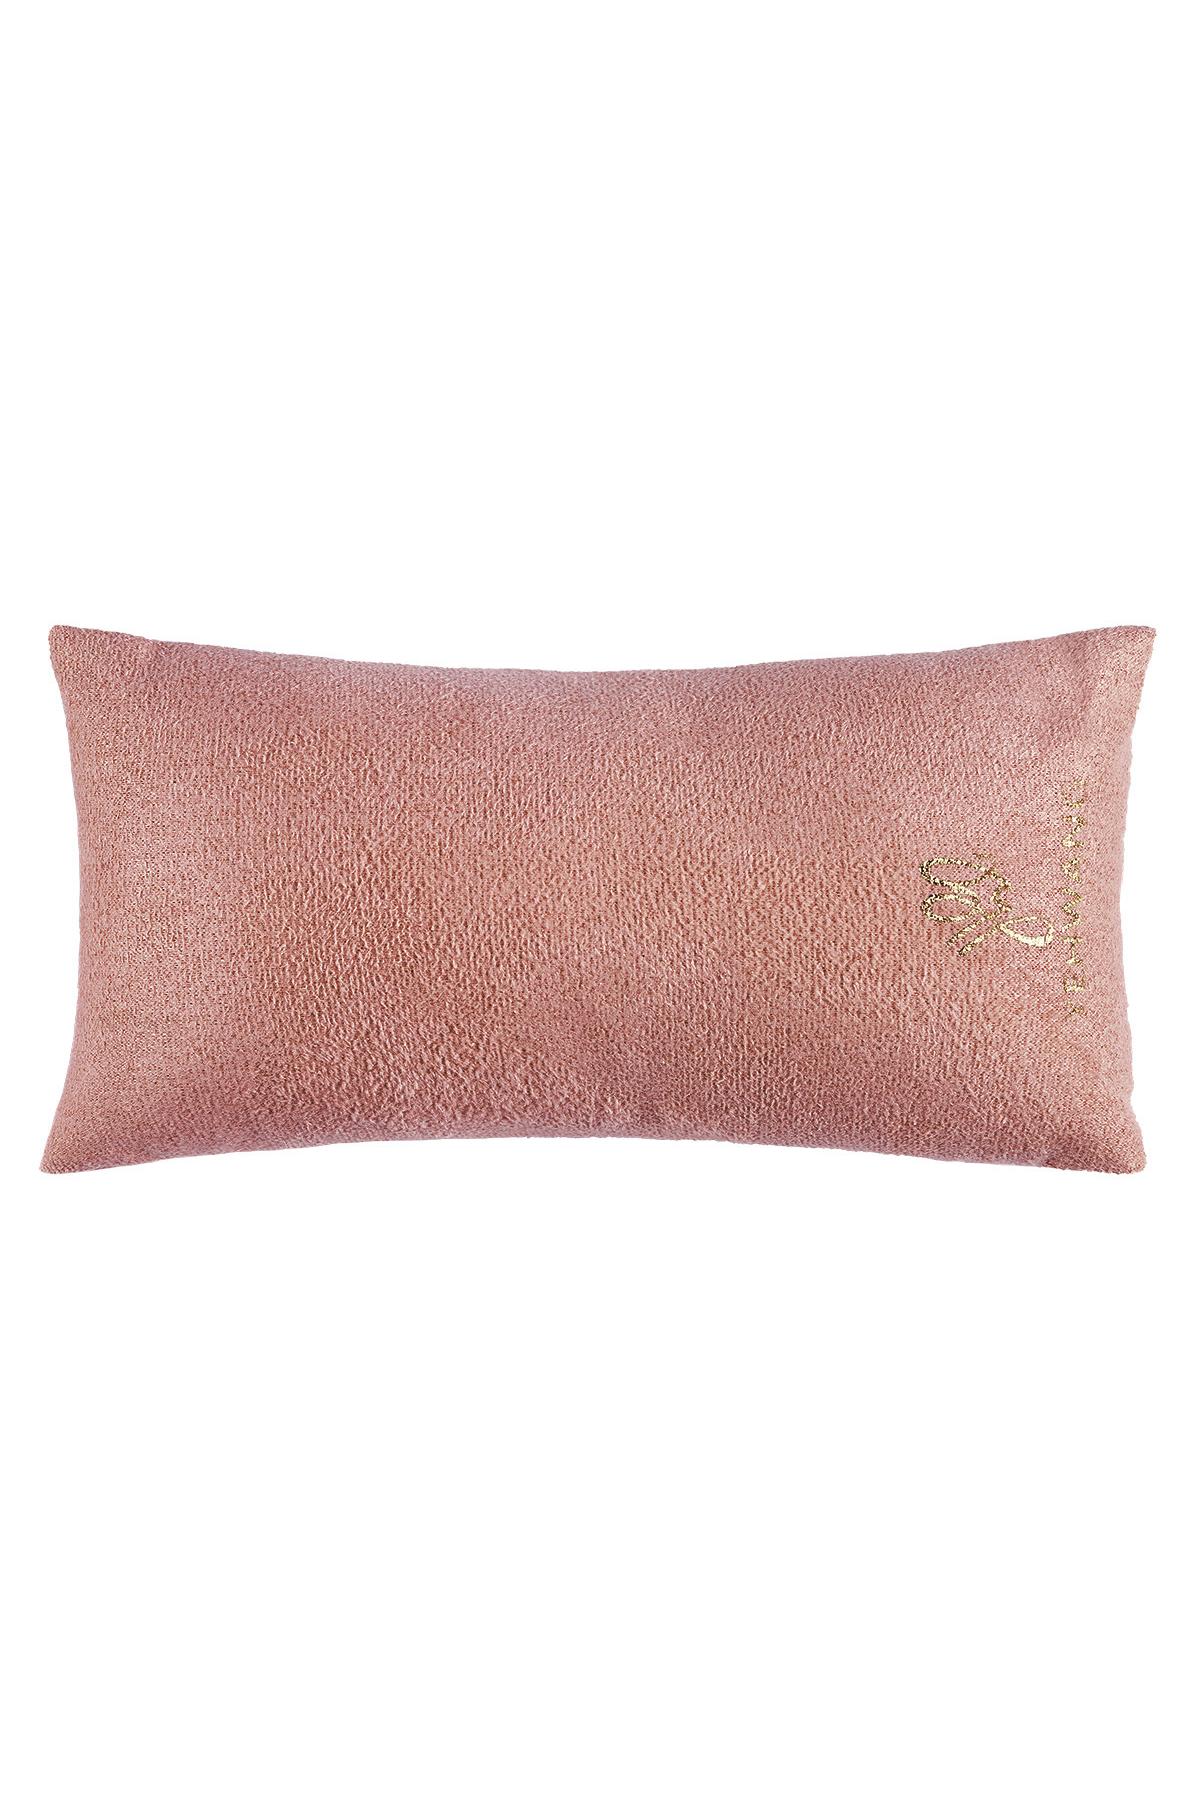 Bracelet cushion Pink Flannel h5 